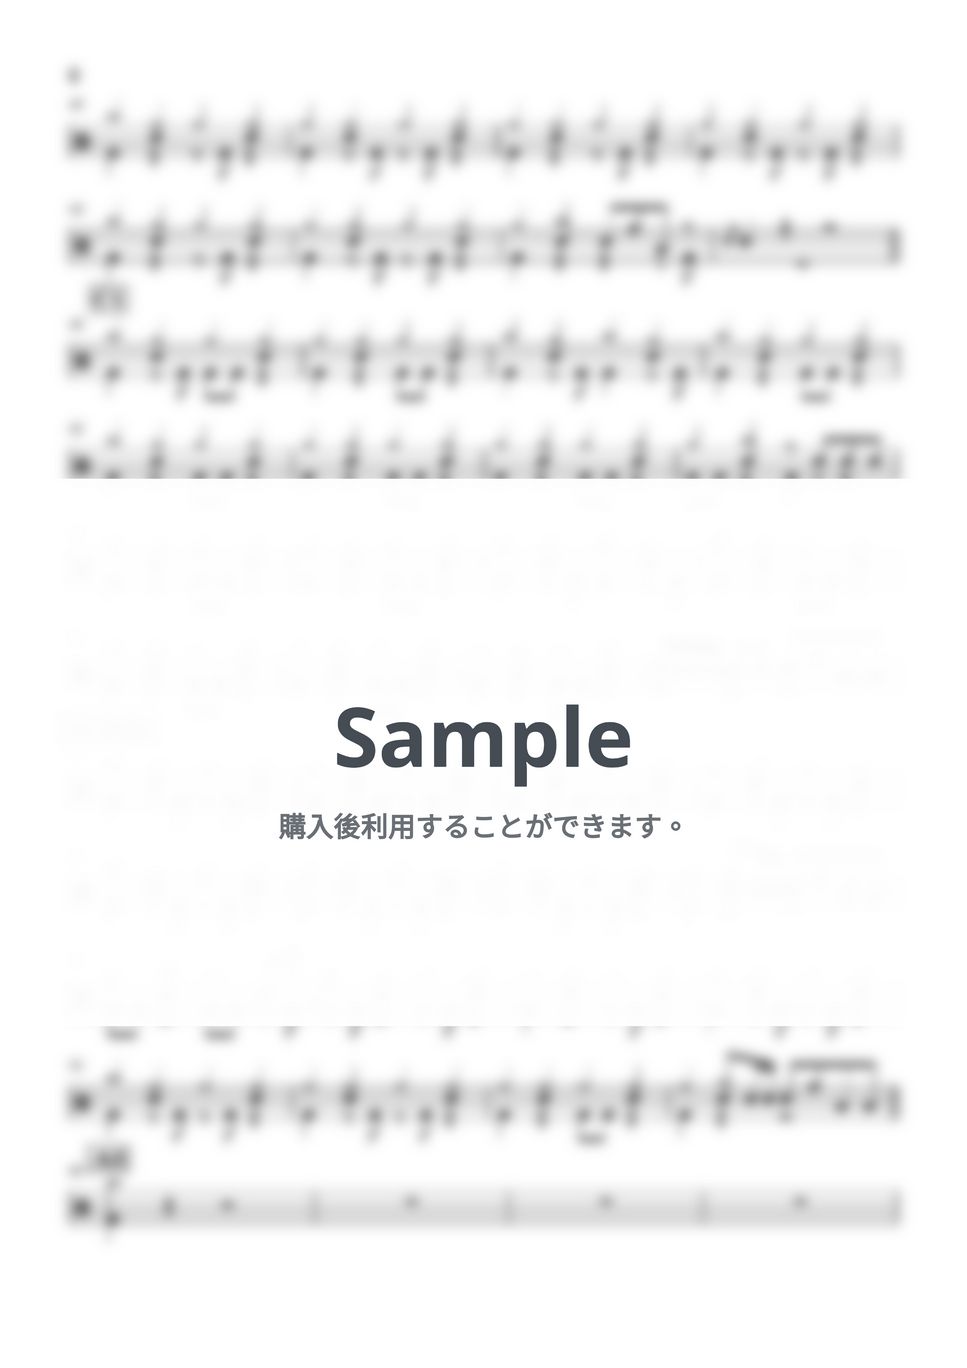 Hump Back - 背景、少年よ (日本テレビ系『バズリズム02』エンディングテーマ、ドラム譜) by Kodai Hojo